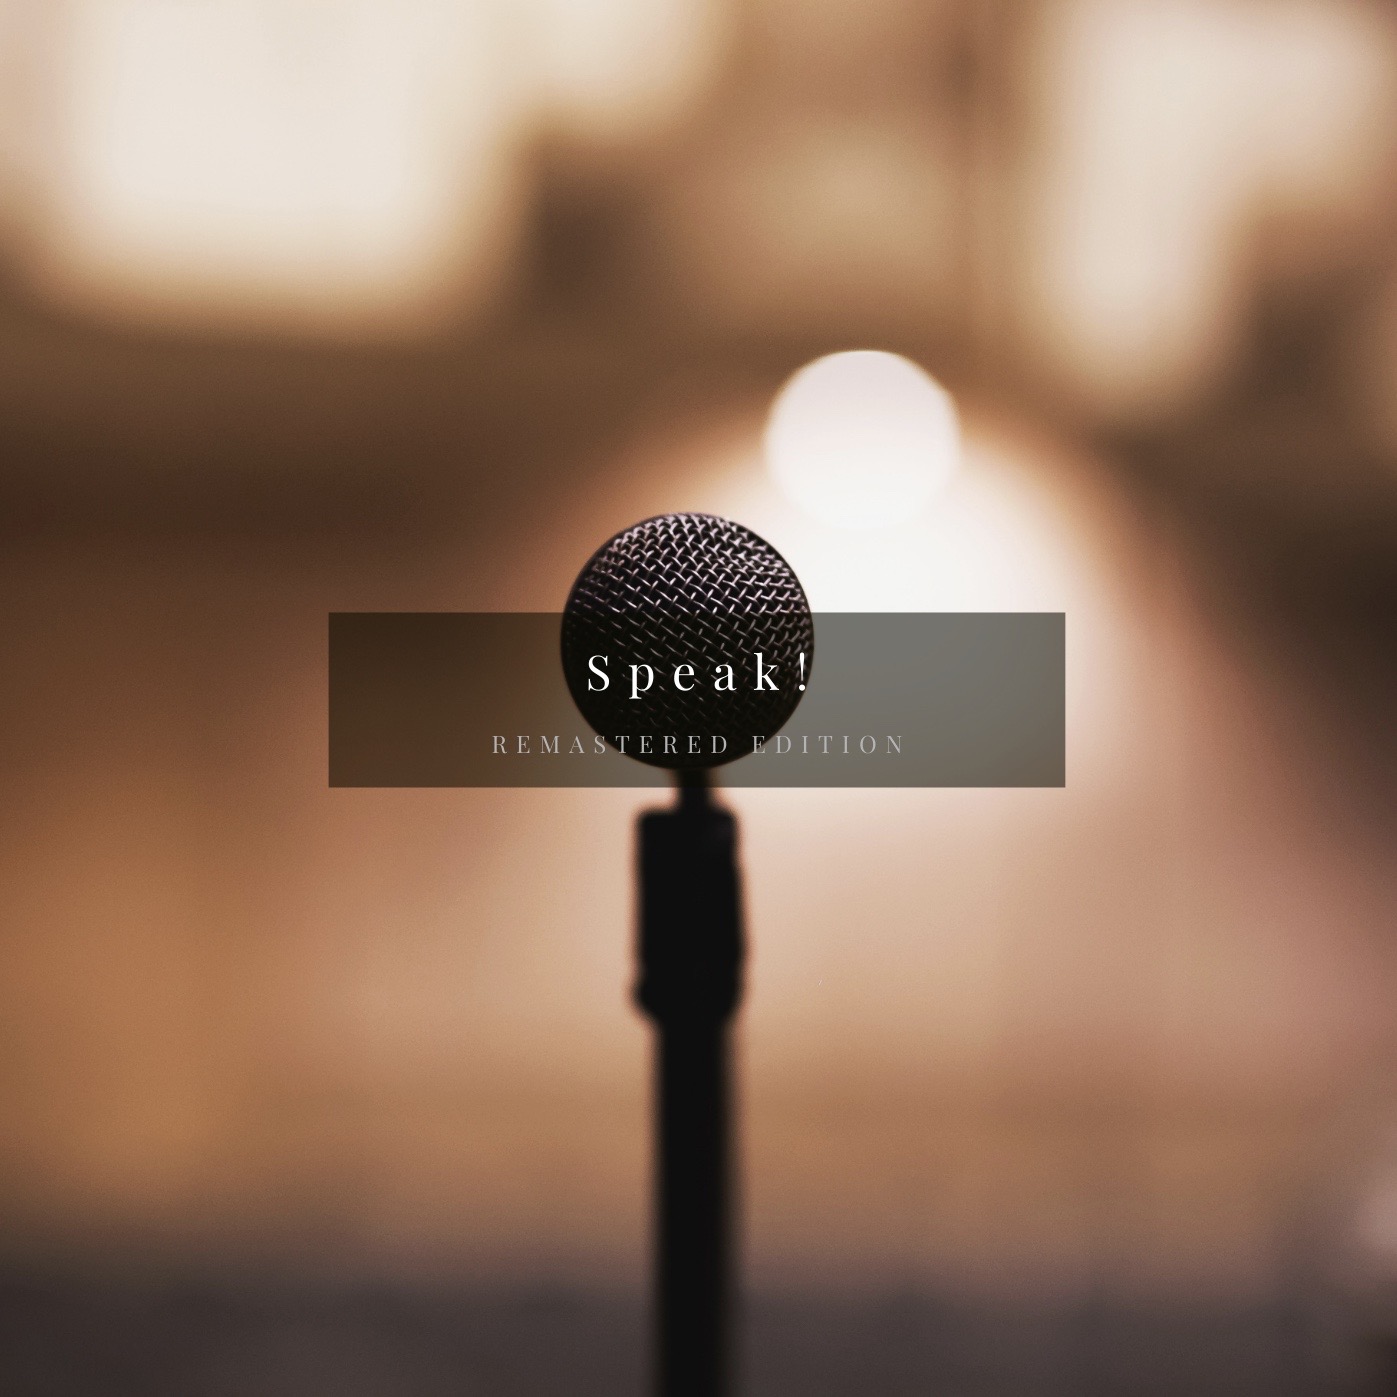 Speak! (Remastered Edition) をリリースしました